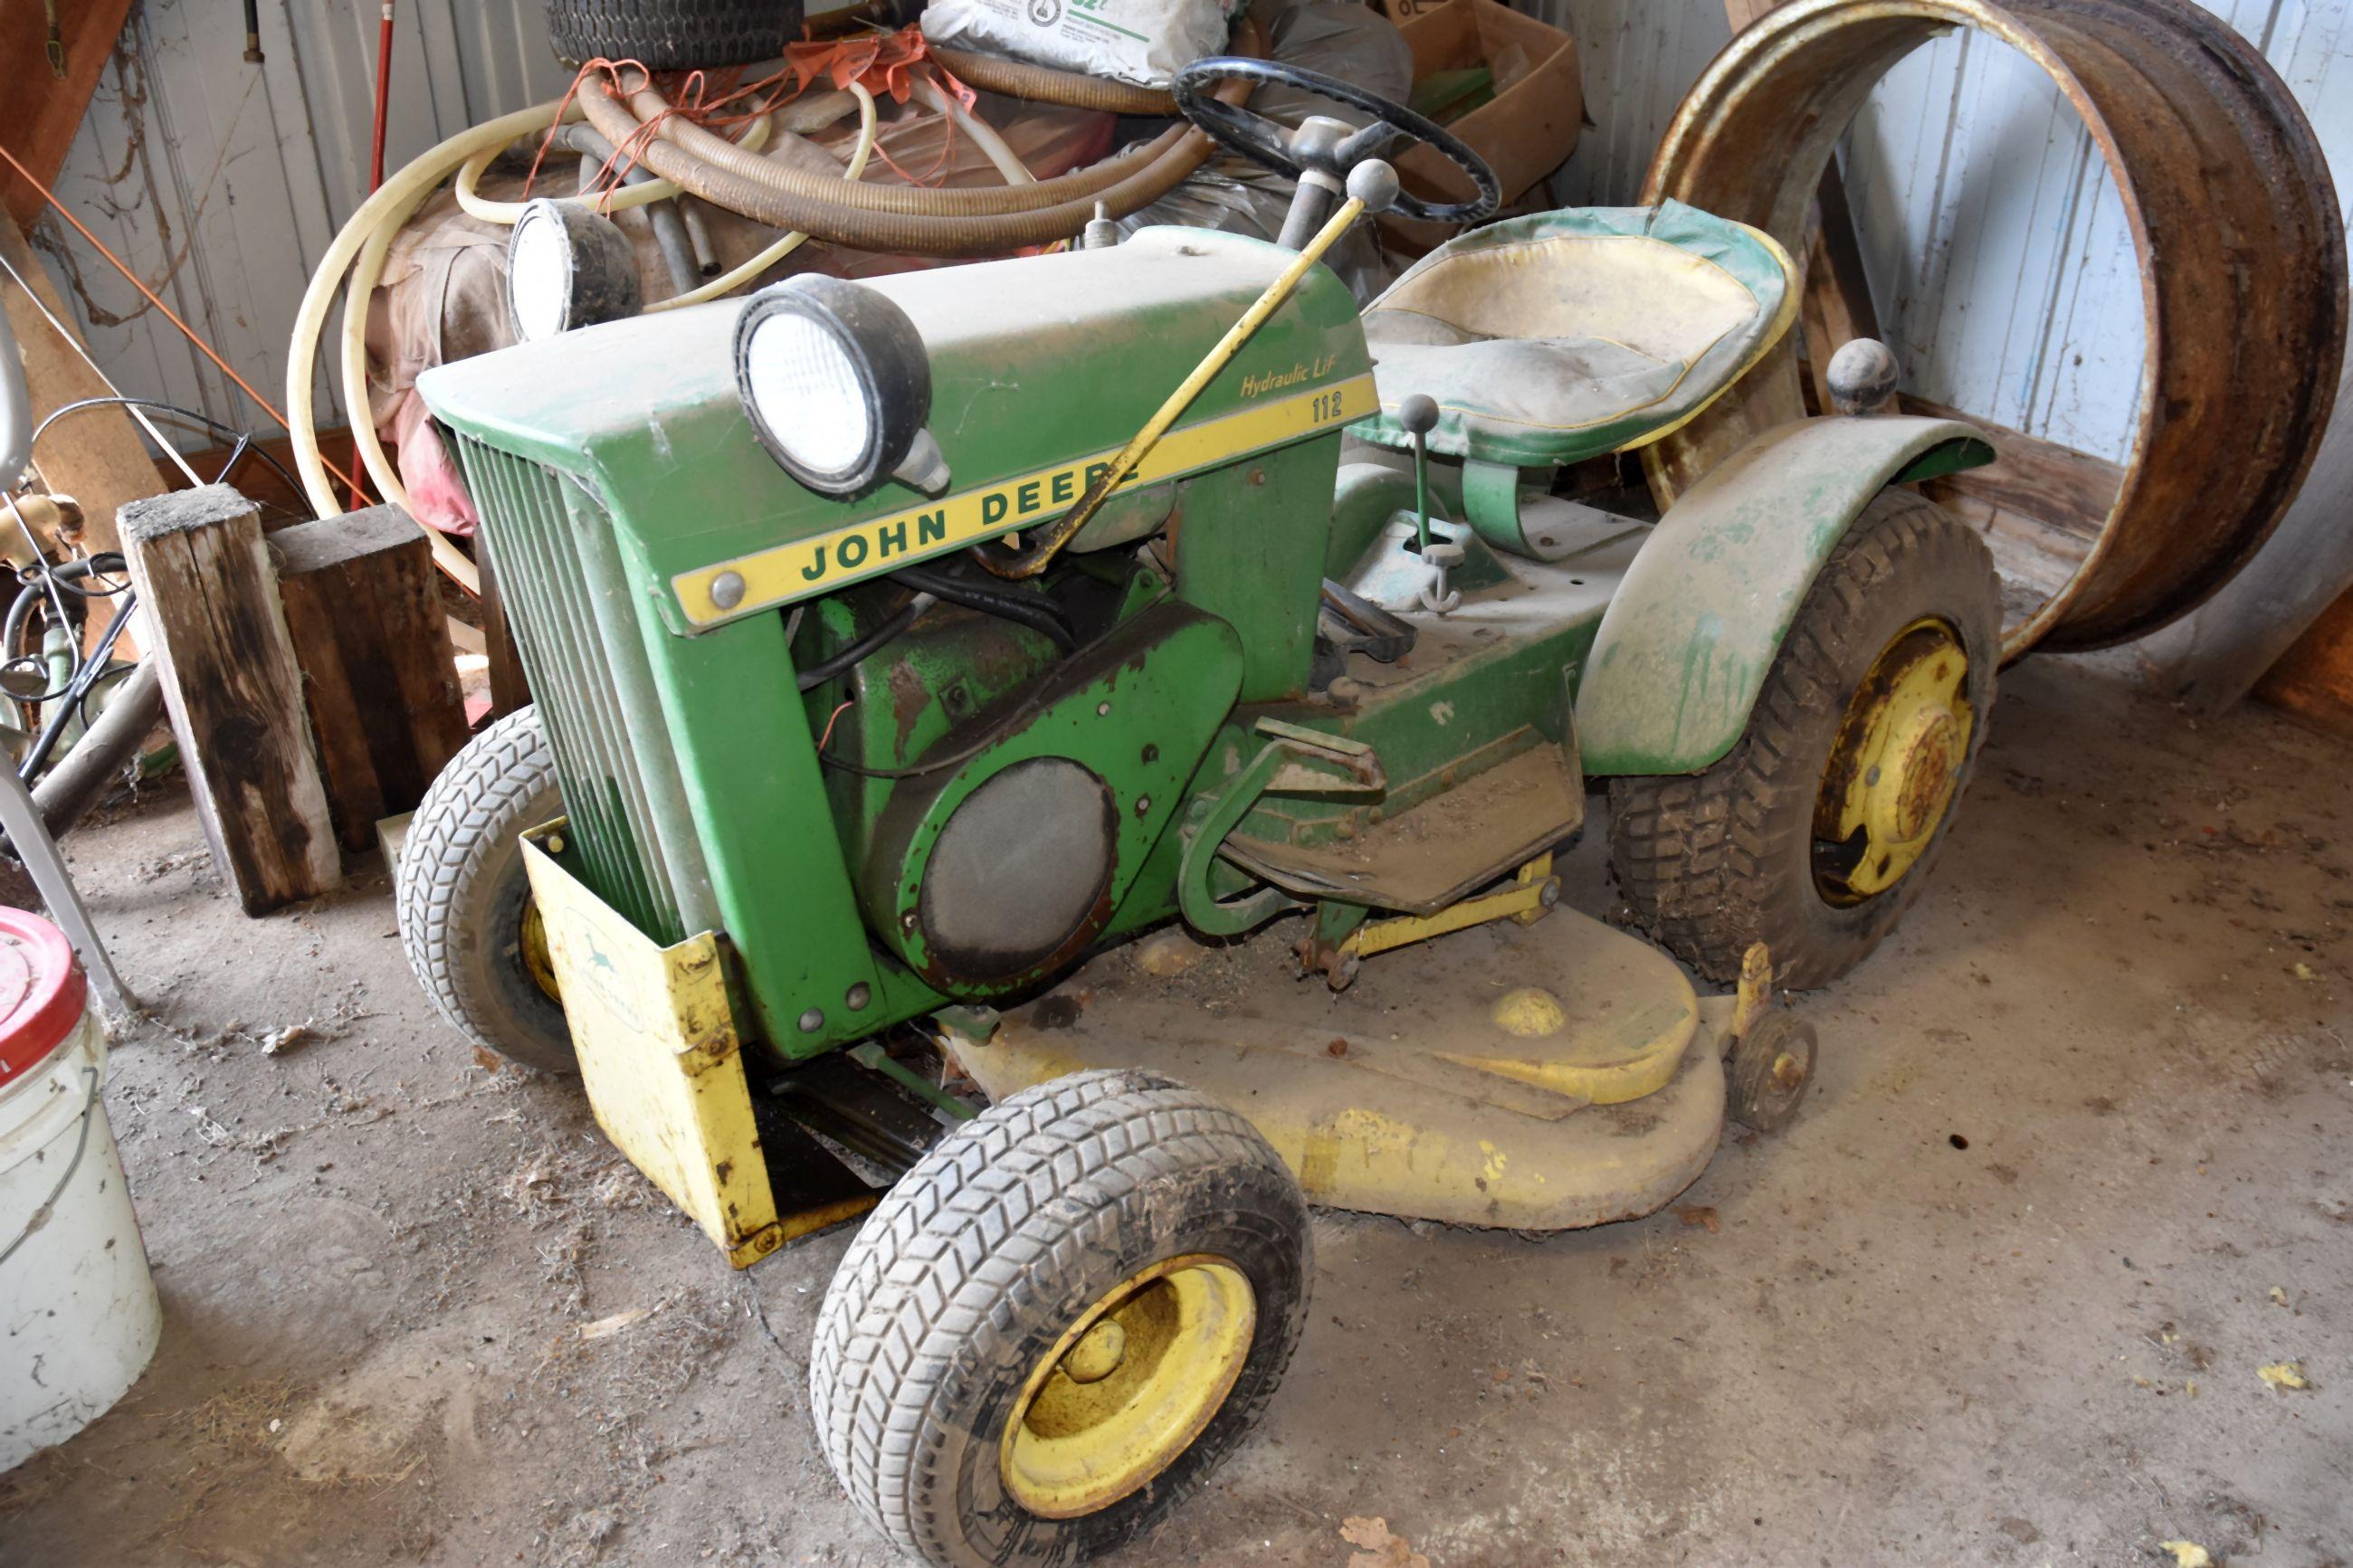 John Deere 112 Garden Tractor, Hydraulic Lift, Mower Deck And Snowblower, Wheel Weights